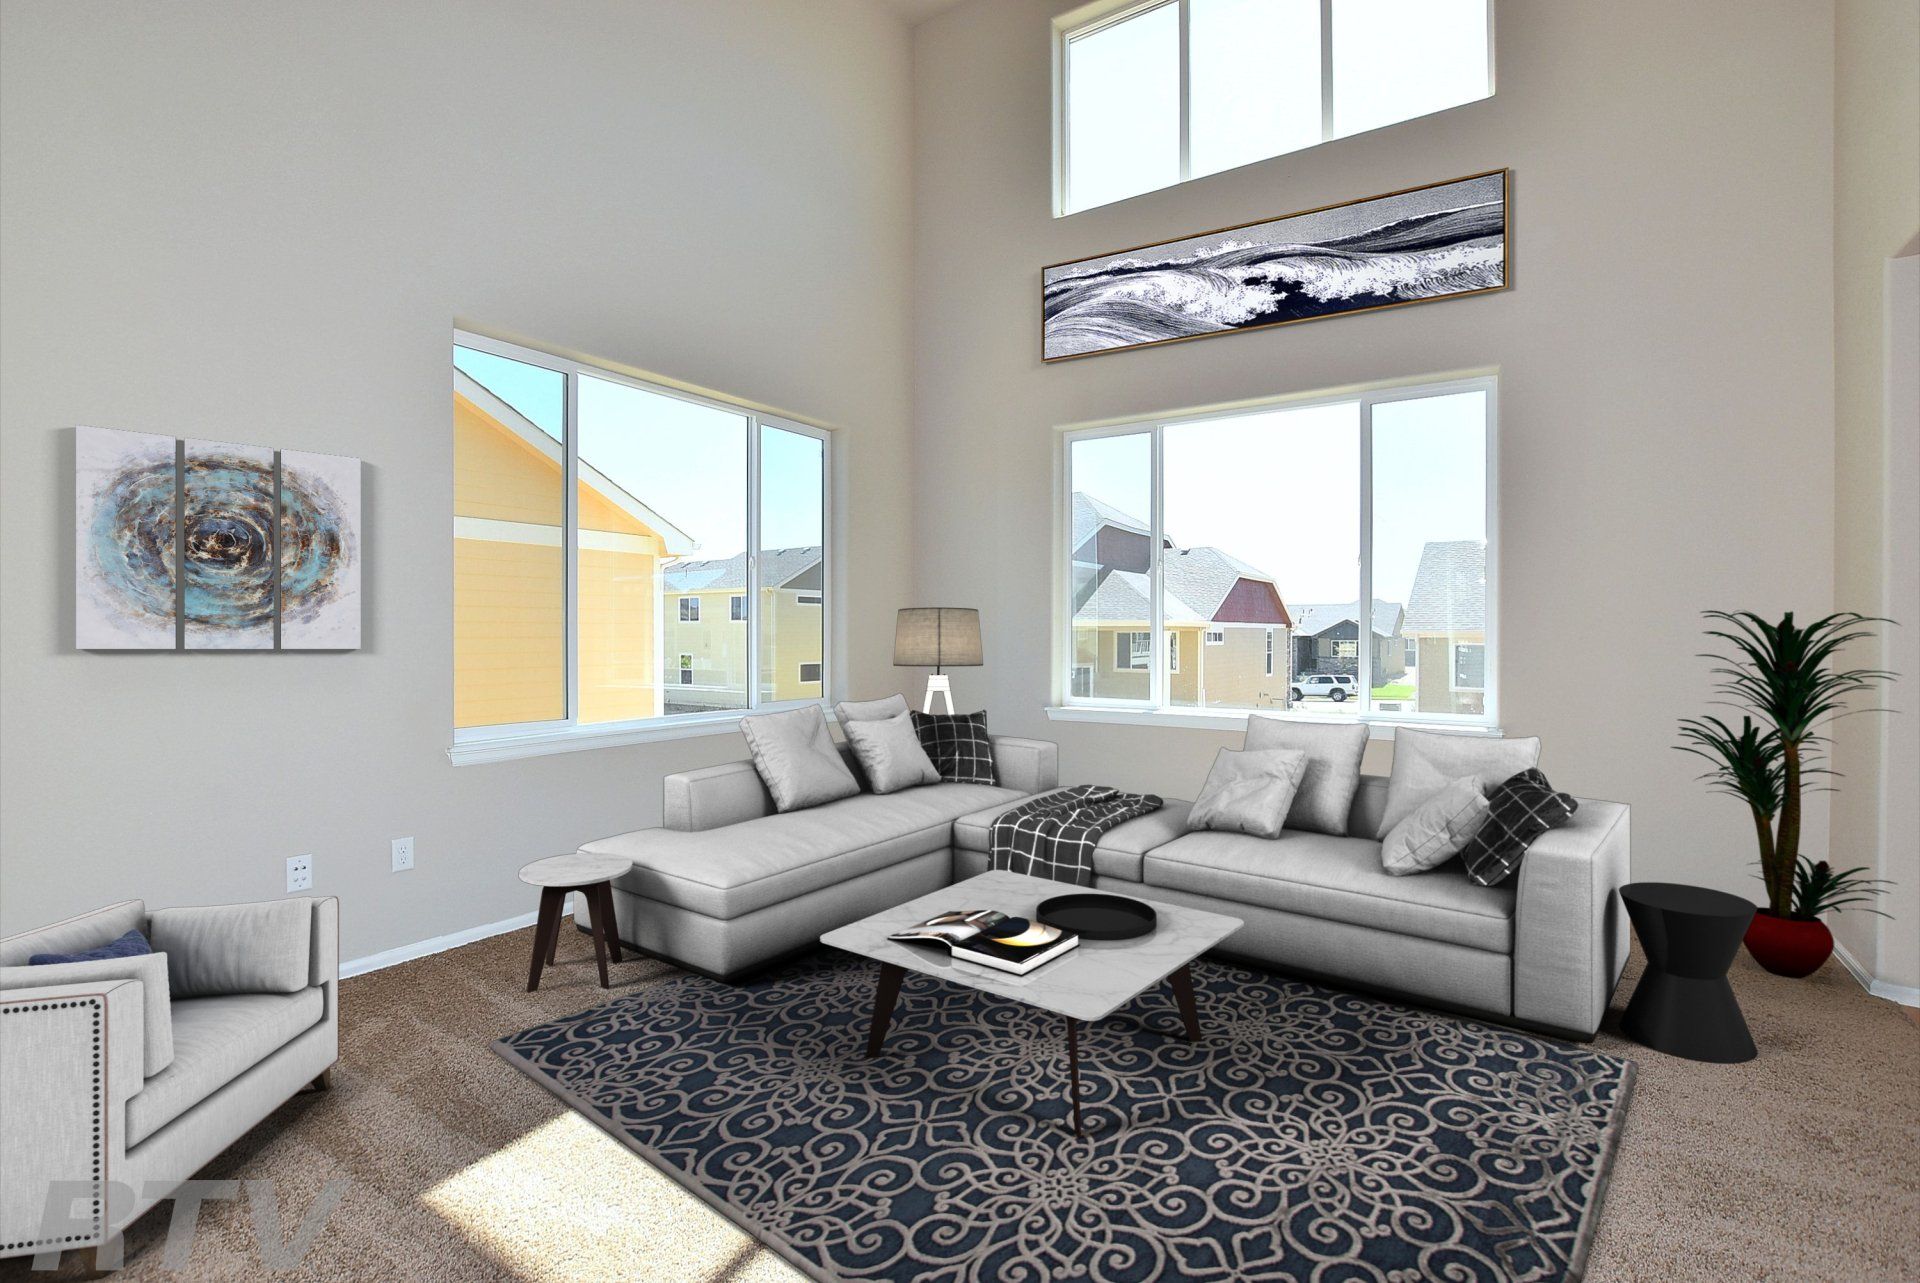 The Saratoga living room with windows